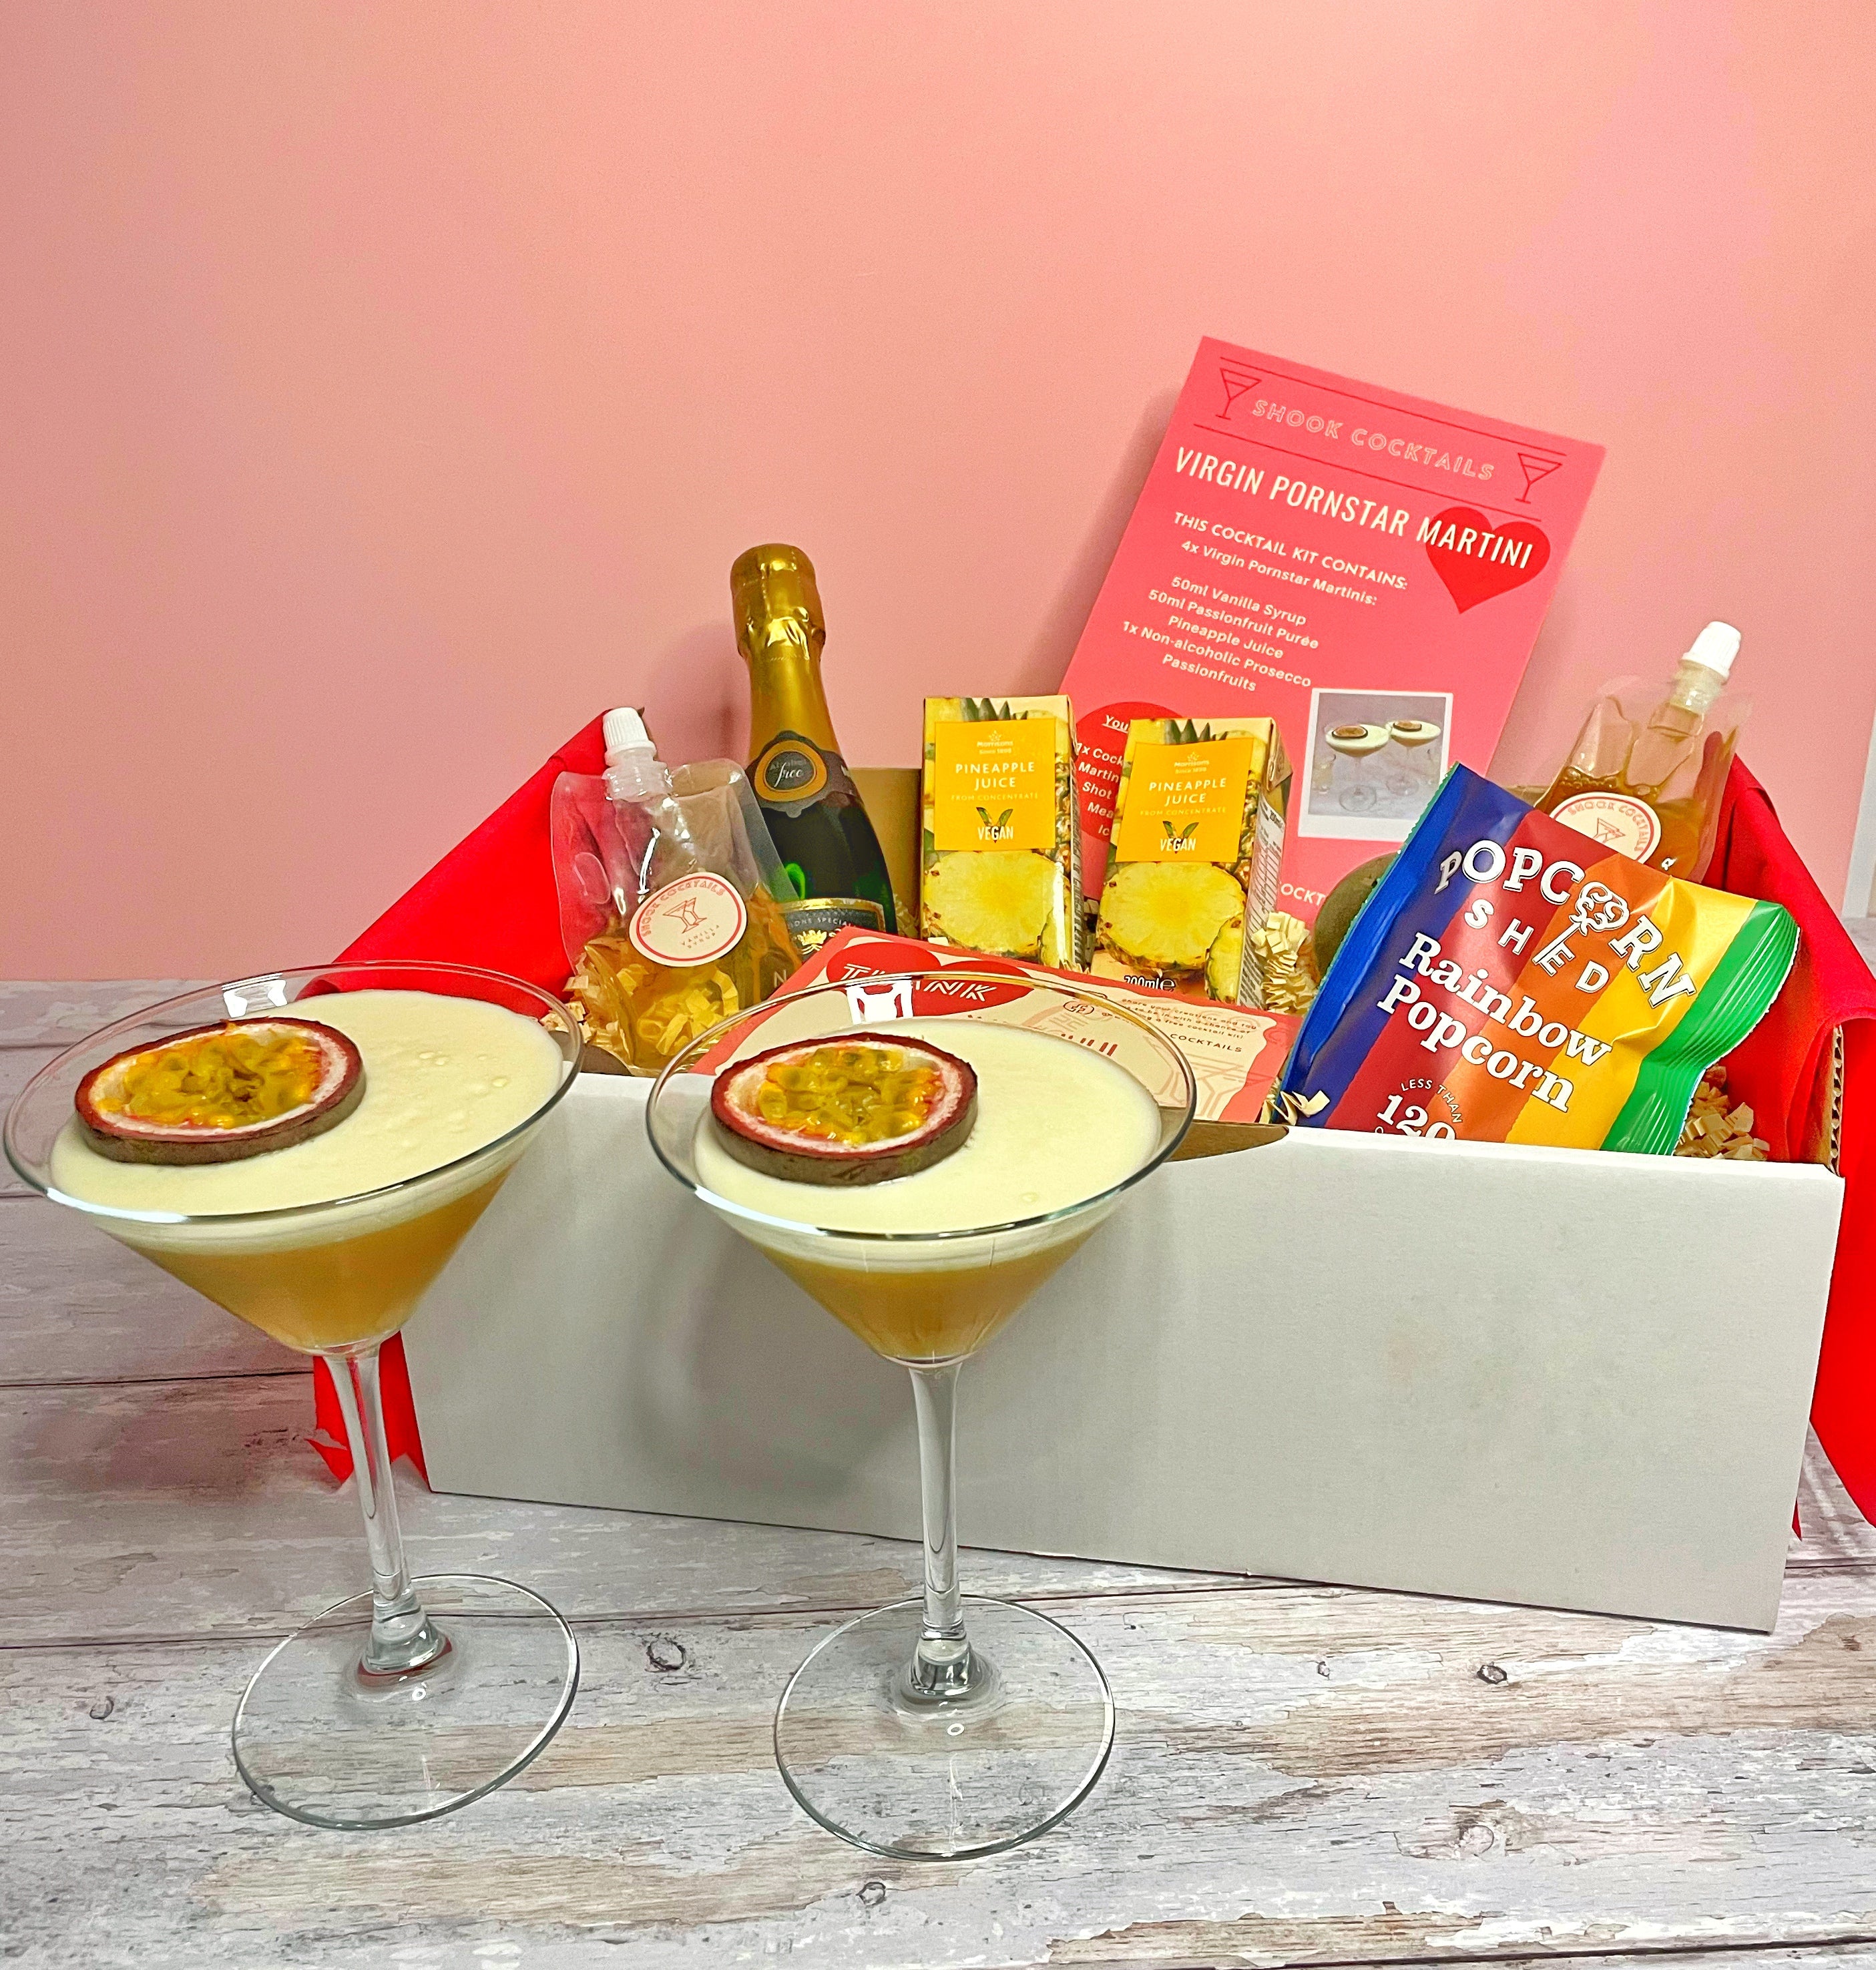 Pornstar Martini Cocktail Kit - The Cocktail Society